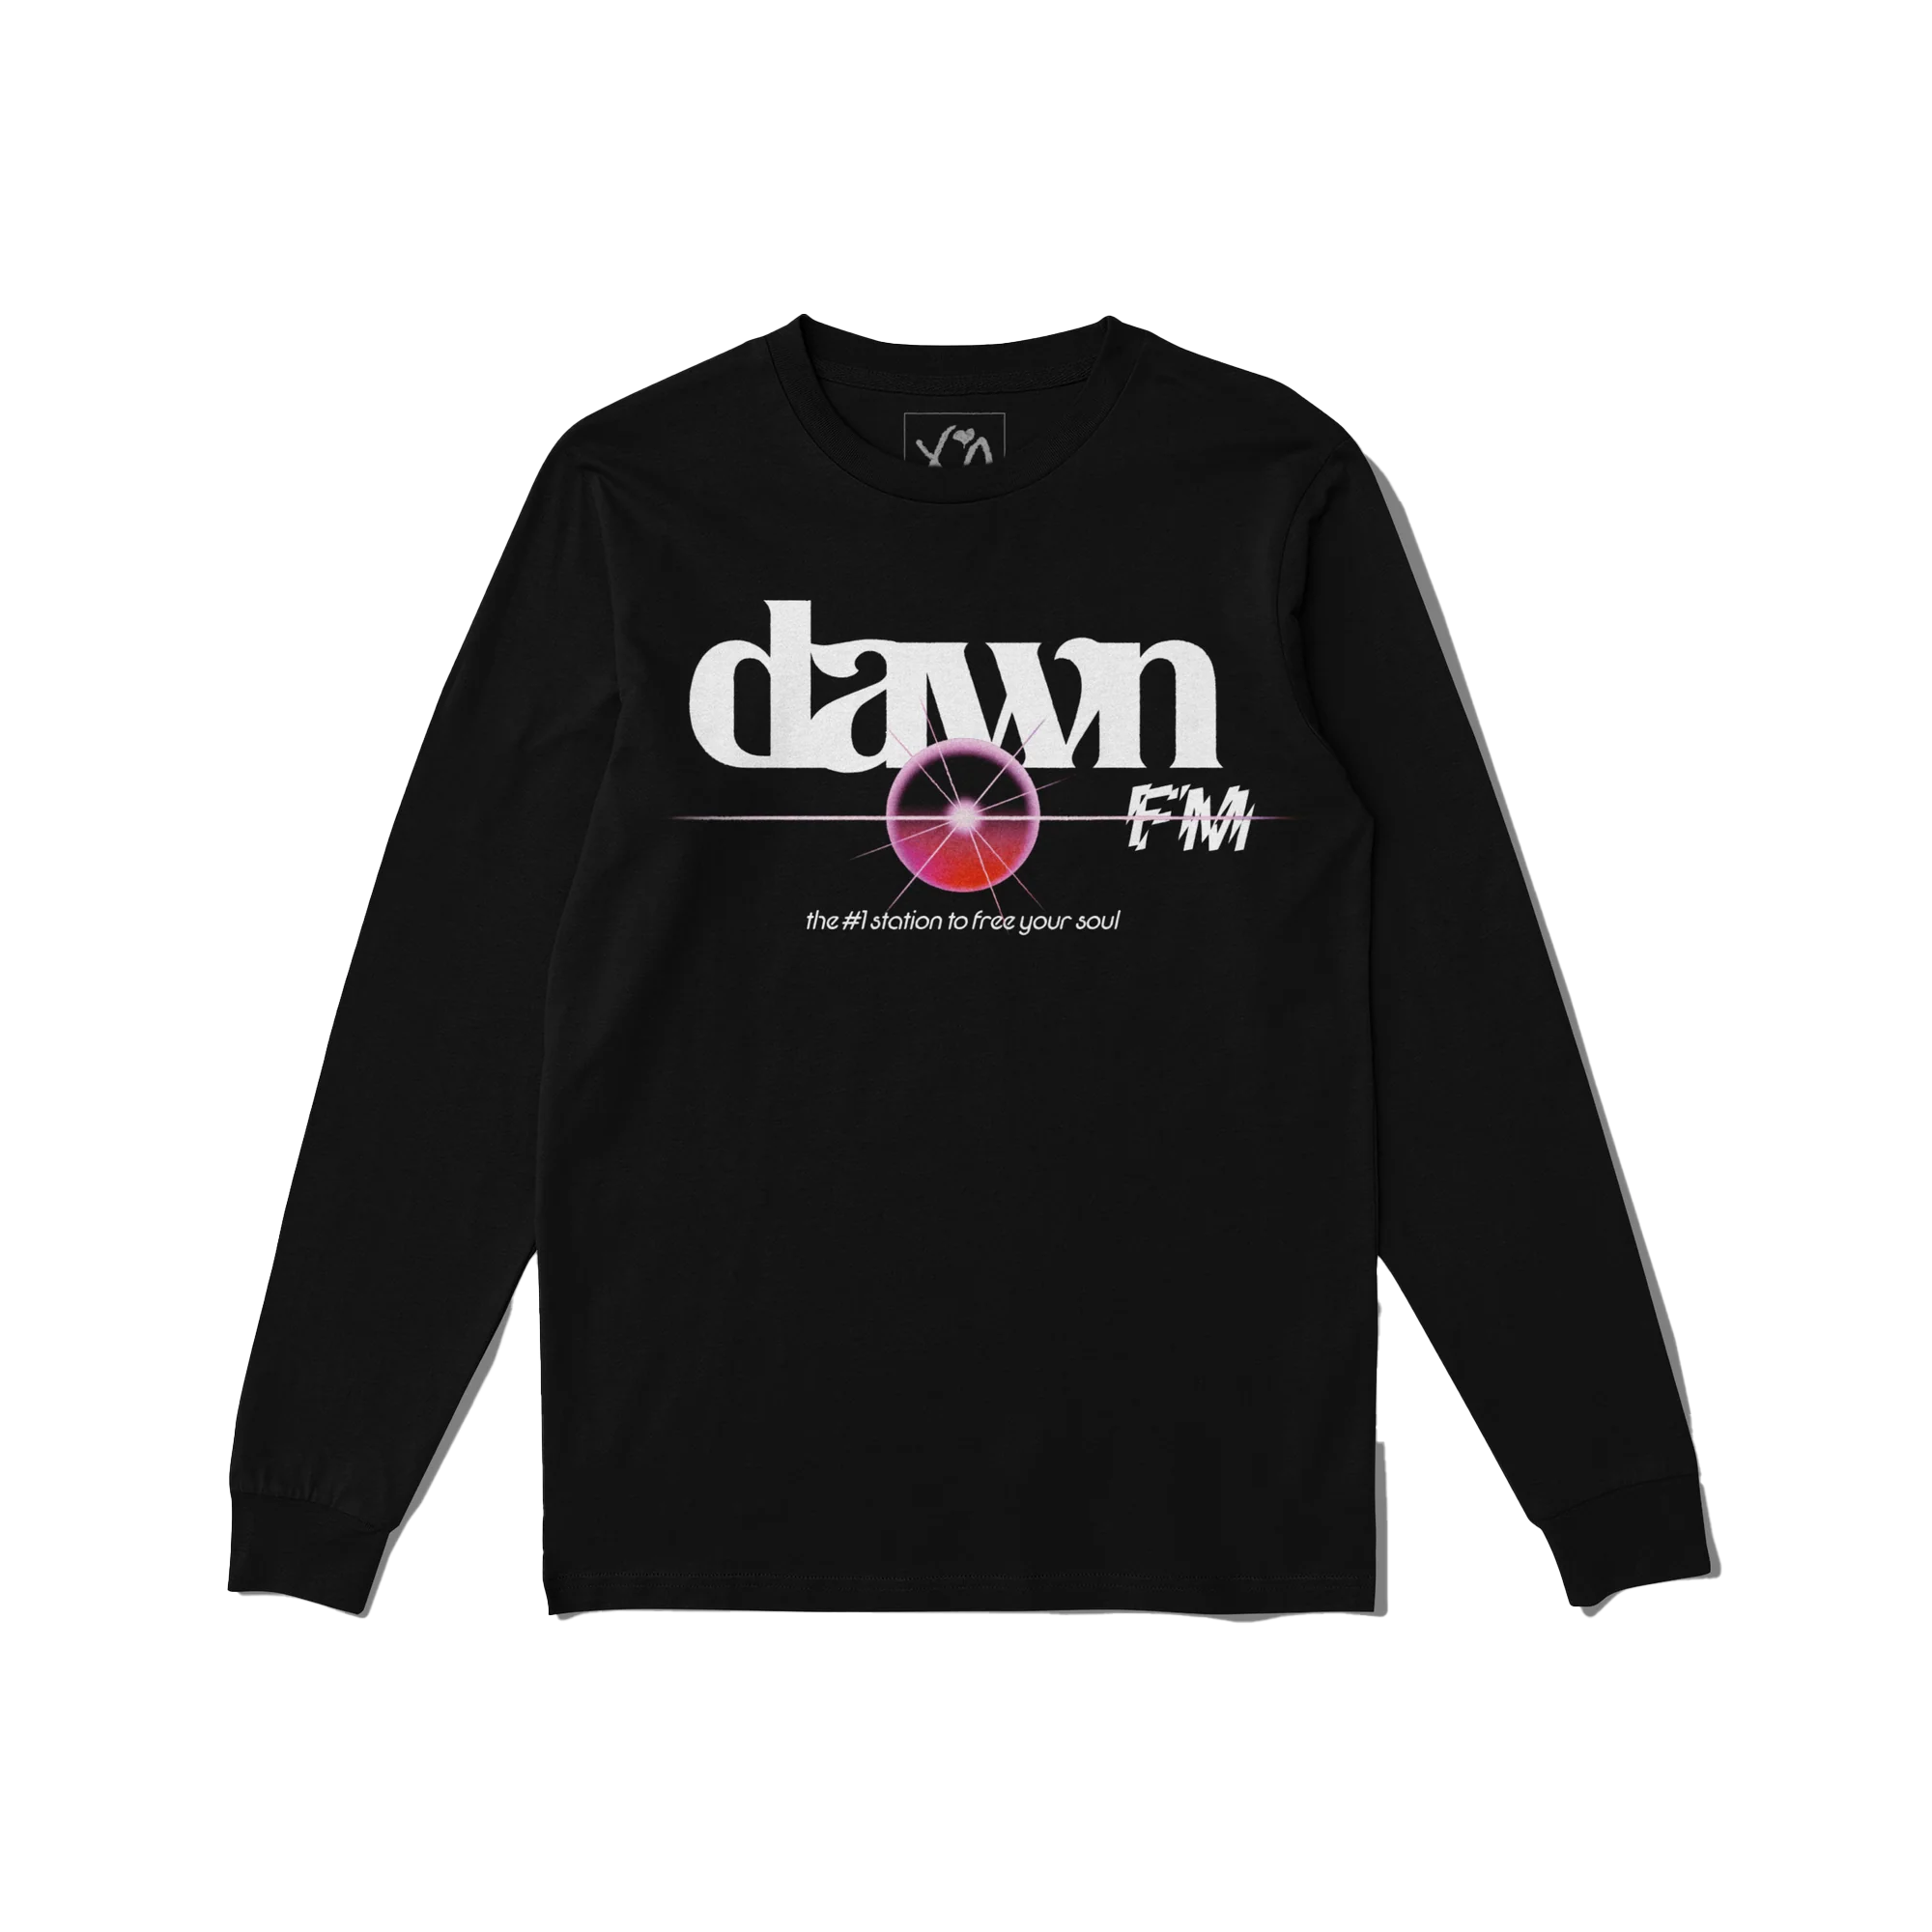 The Weeknd - Dawn Fm The #1 Station Longsleeve Tee